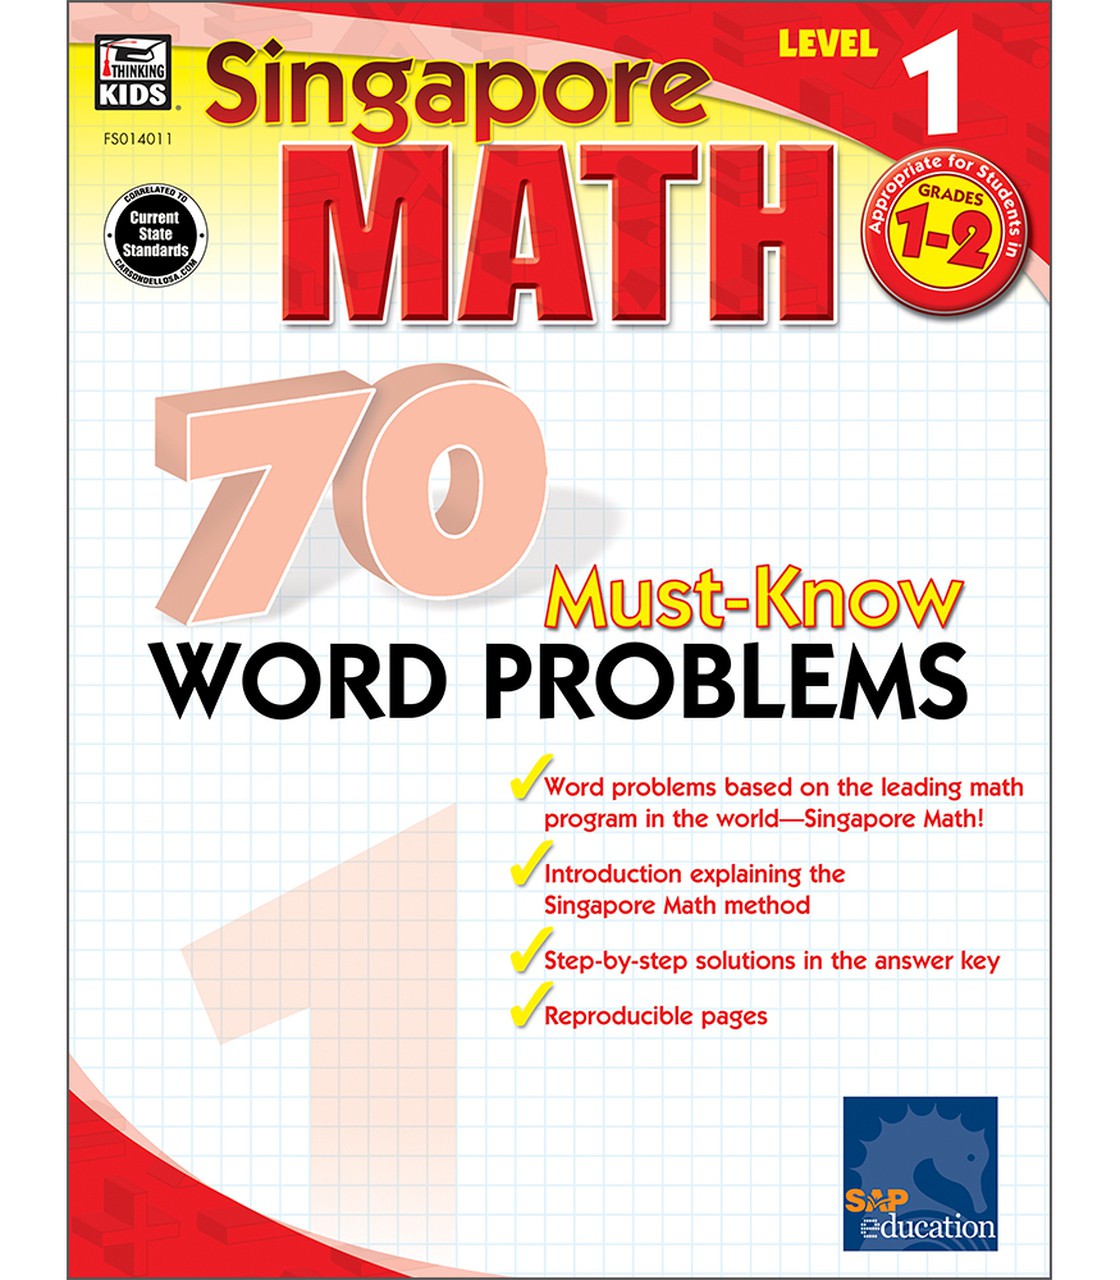 Singapore Word Problems Level 1